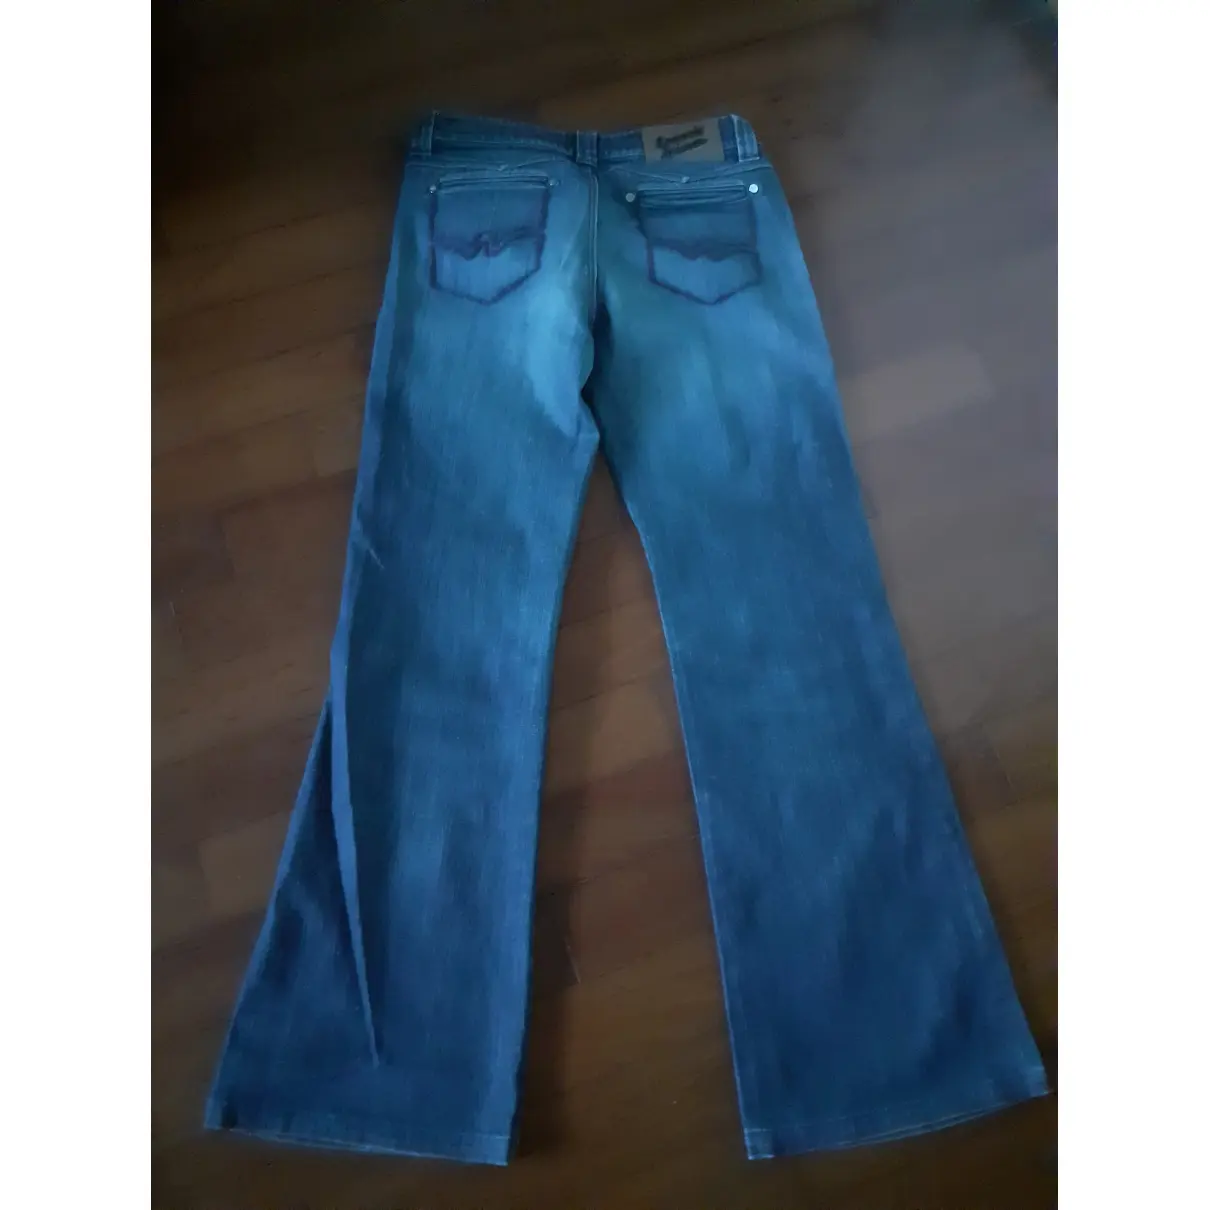 Buy Emporio Armani Large jeans online